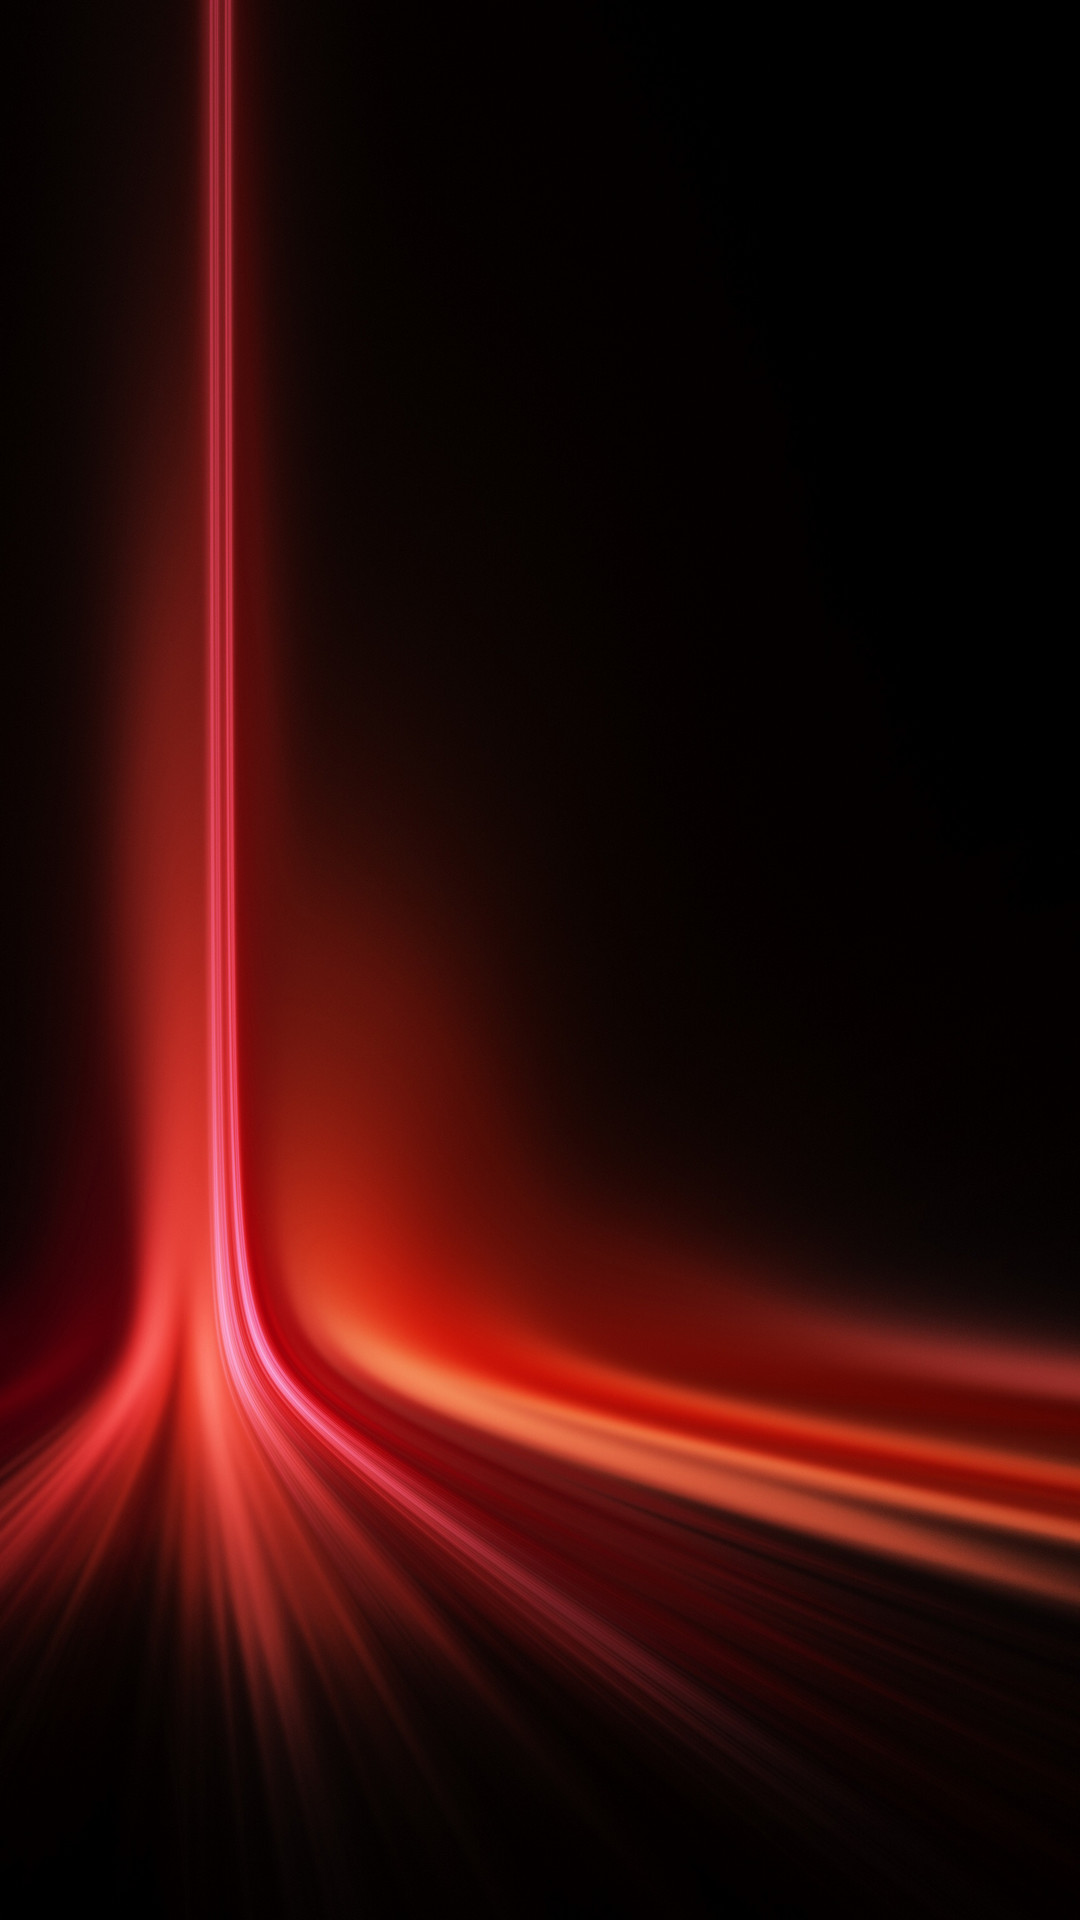 1080x1920 Vertical Red Laser Light Spread iPhone 6 Plus HD Wallpaper